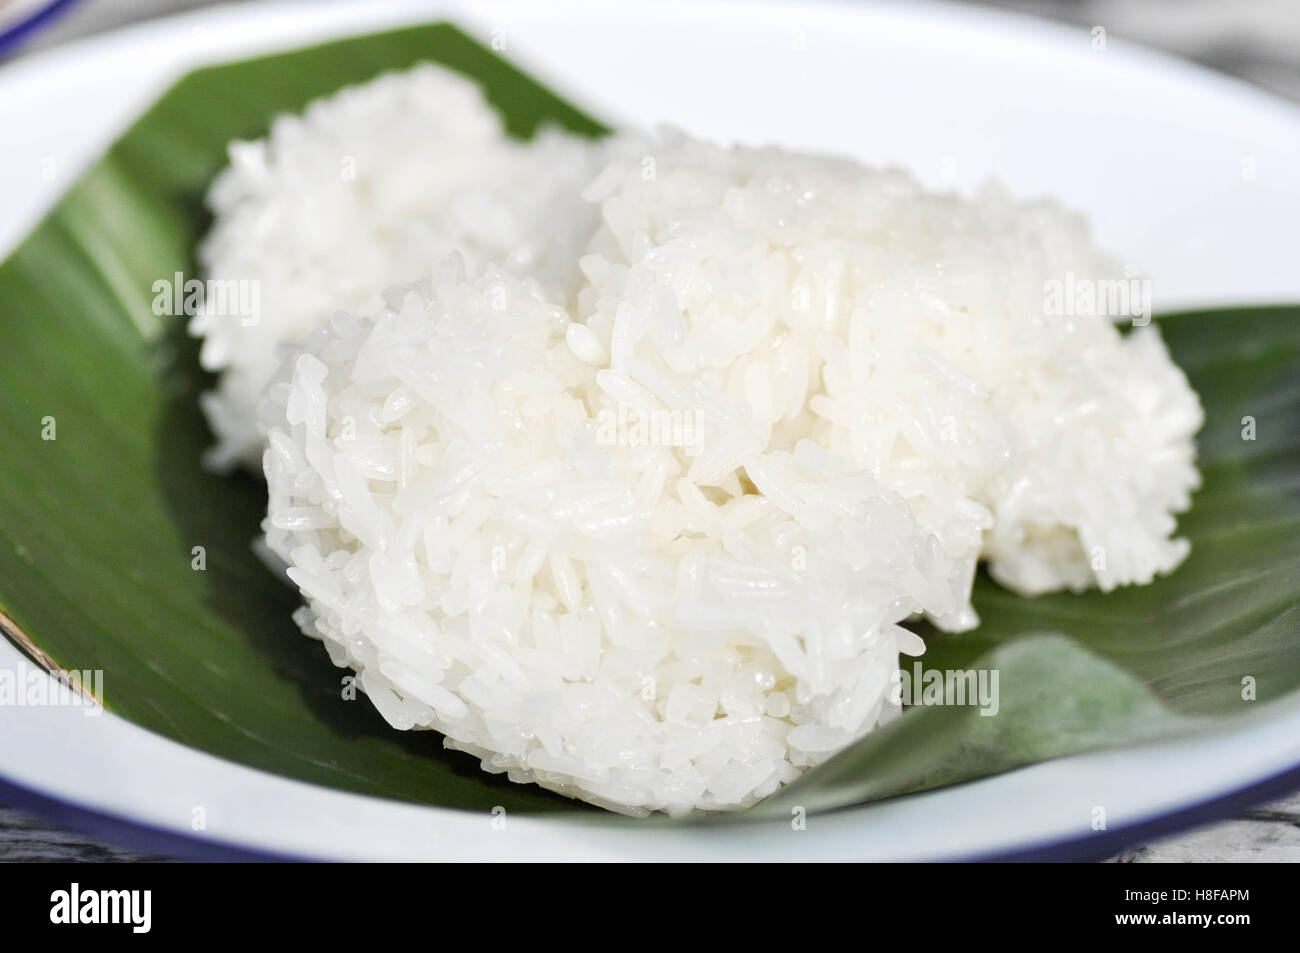 https://c8.alamy.com/comp/H8FAPM/sticky-rice-or-thai-sticky-rice-dish-H8FAPM.jpg